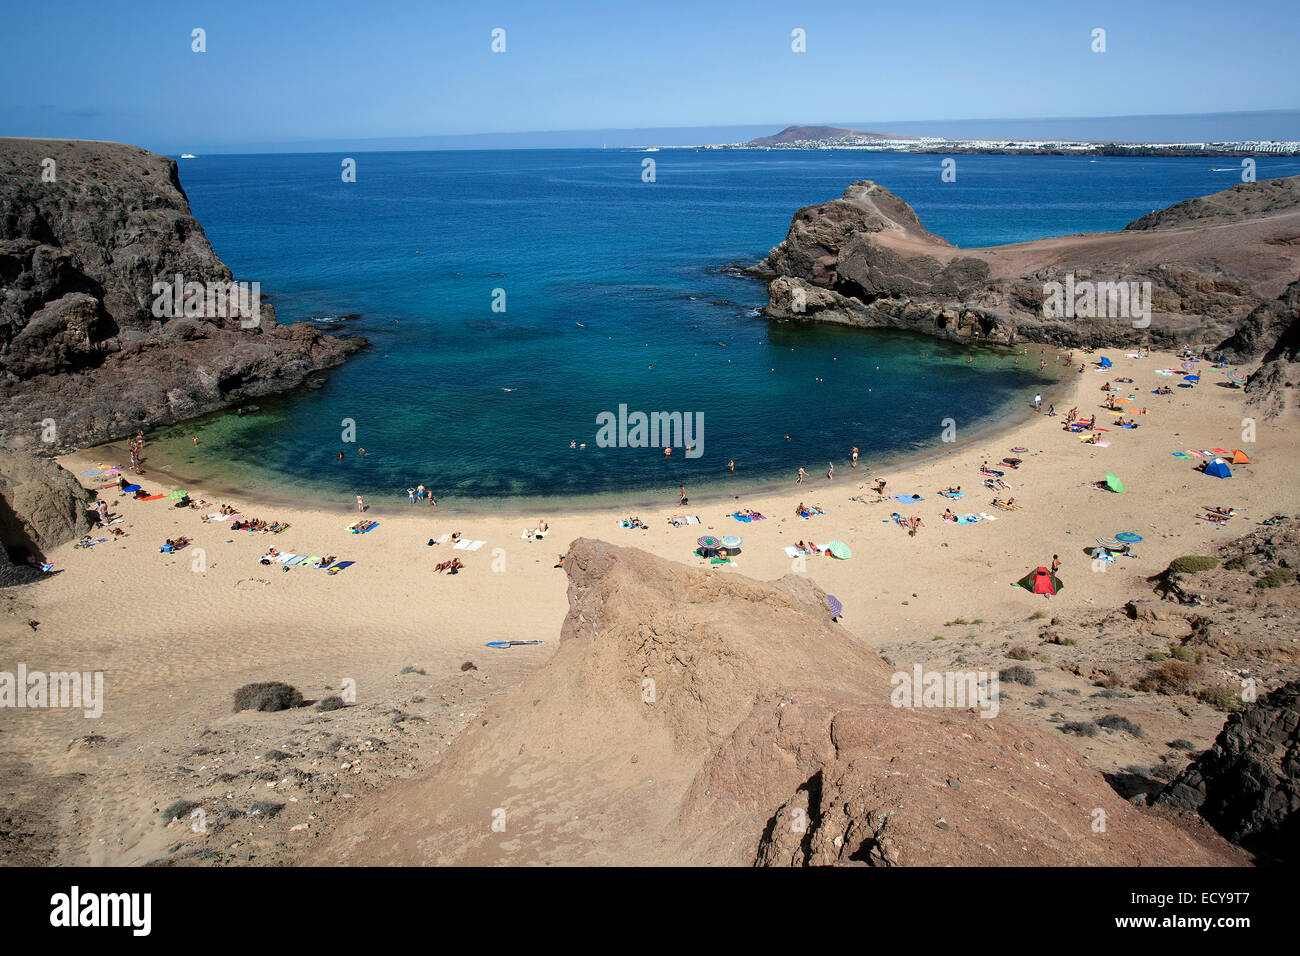 Papagayo beaches or Playas de Papagayo, Playa Blanca in the back, Lanzarote, Canary Islands, Spain Stock Photo